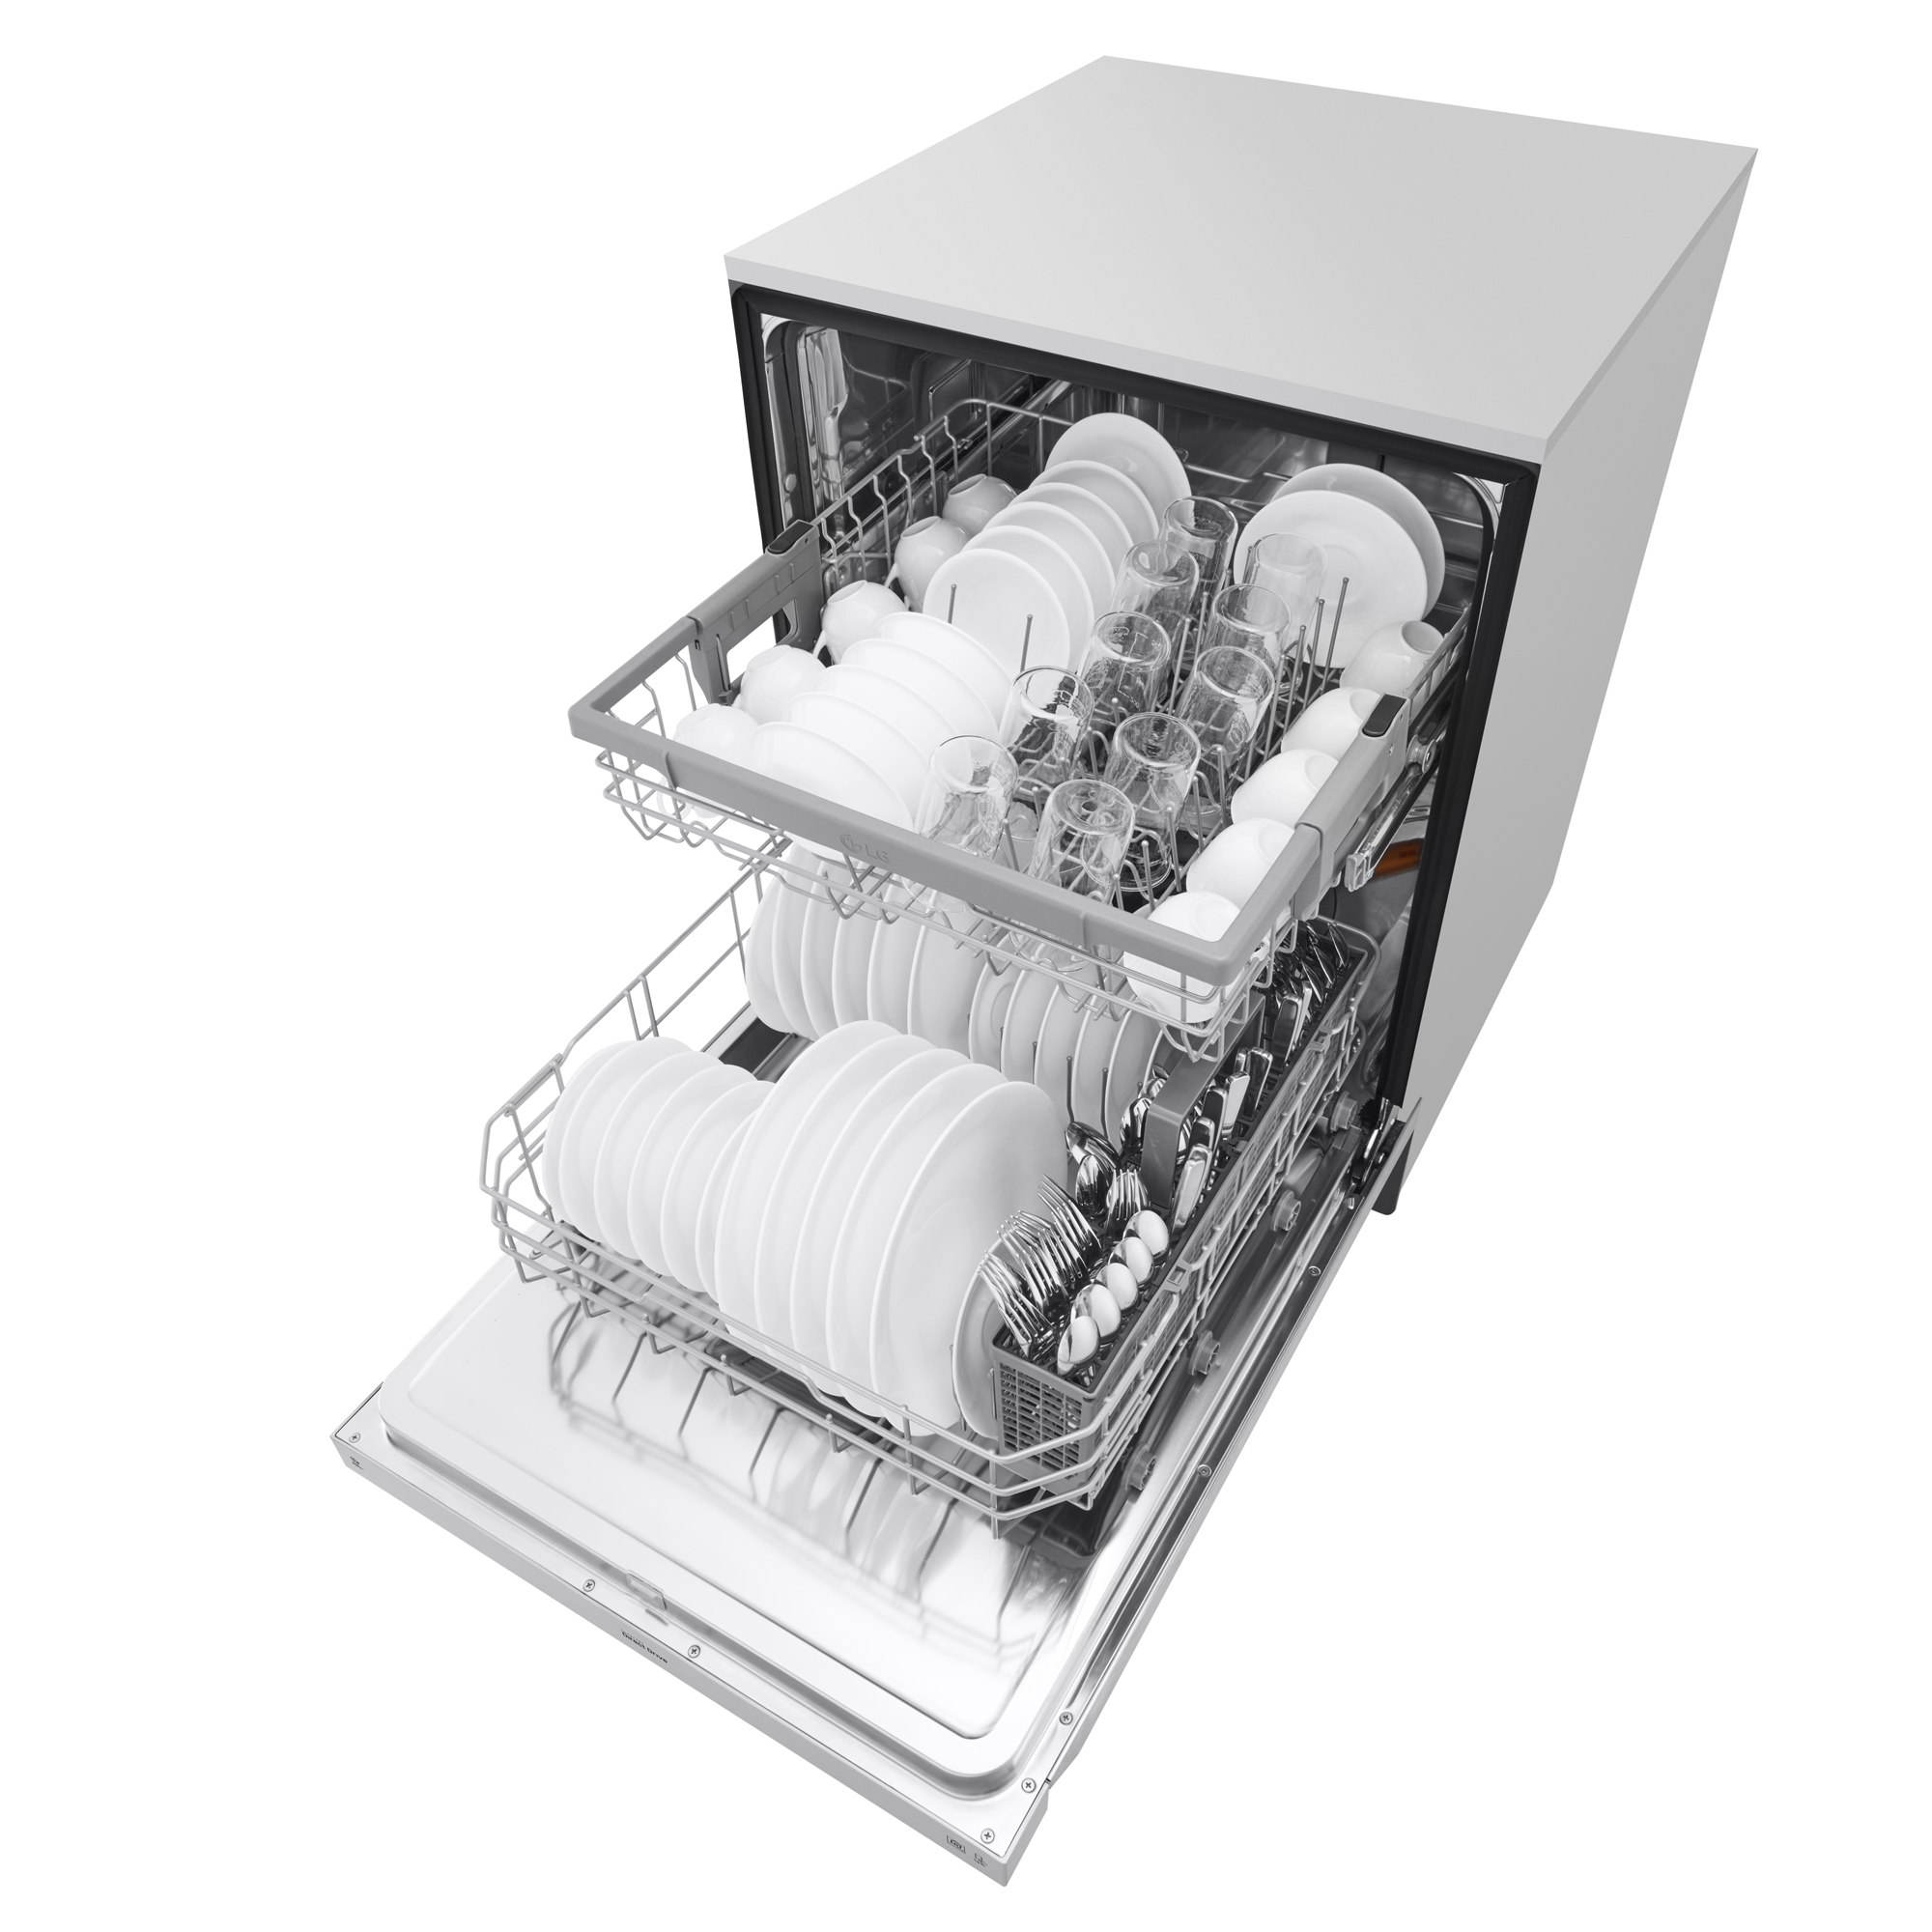 lg ldf5545st dishwasher reviews